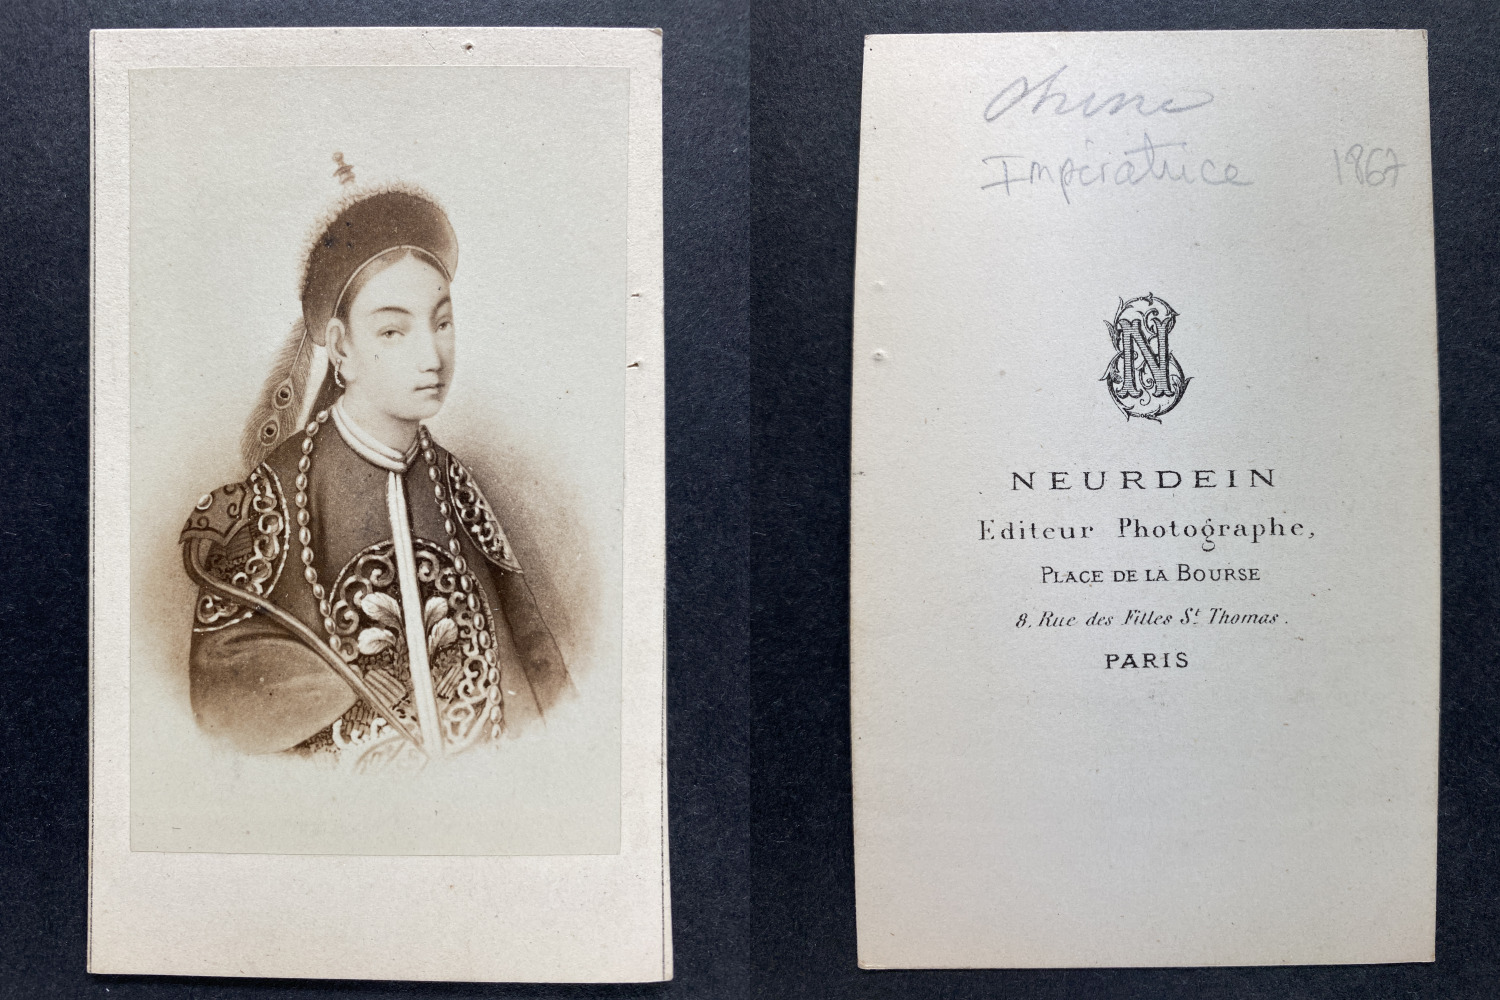 Neurdein, Paris, Empress of China Vintage cdv albumen print.